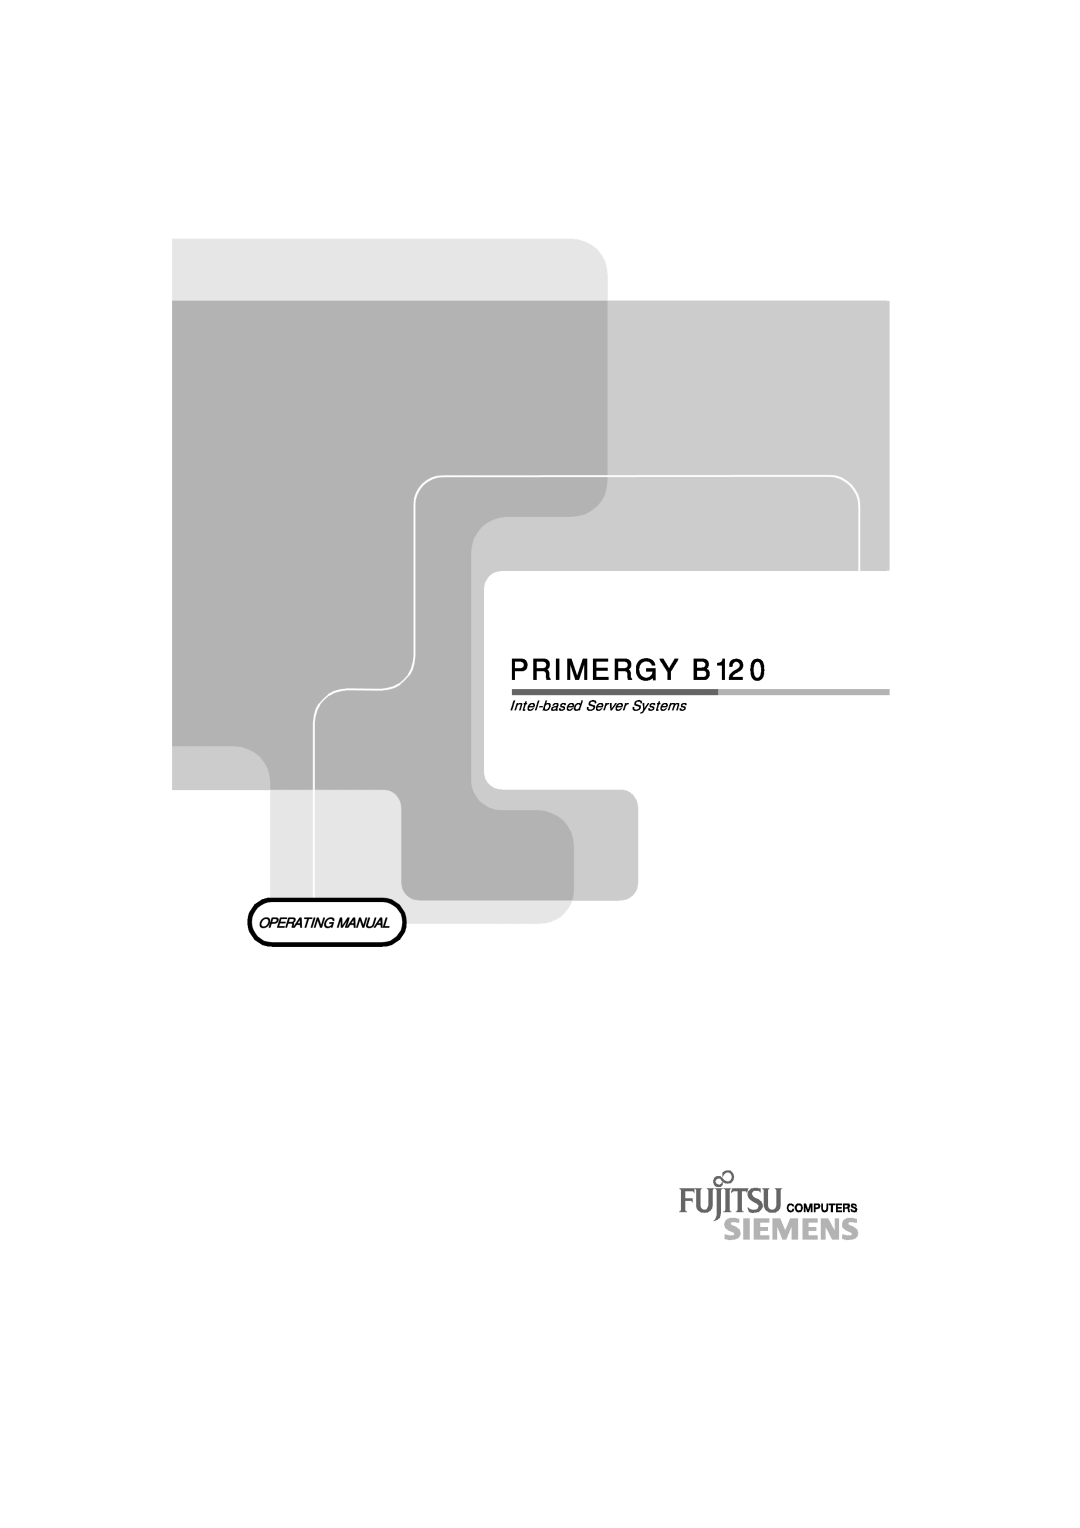 Fujitsu manual PRIMERGY B120, Intel-based Server Systems, Operating Manual 